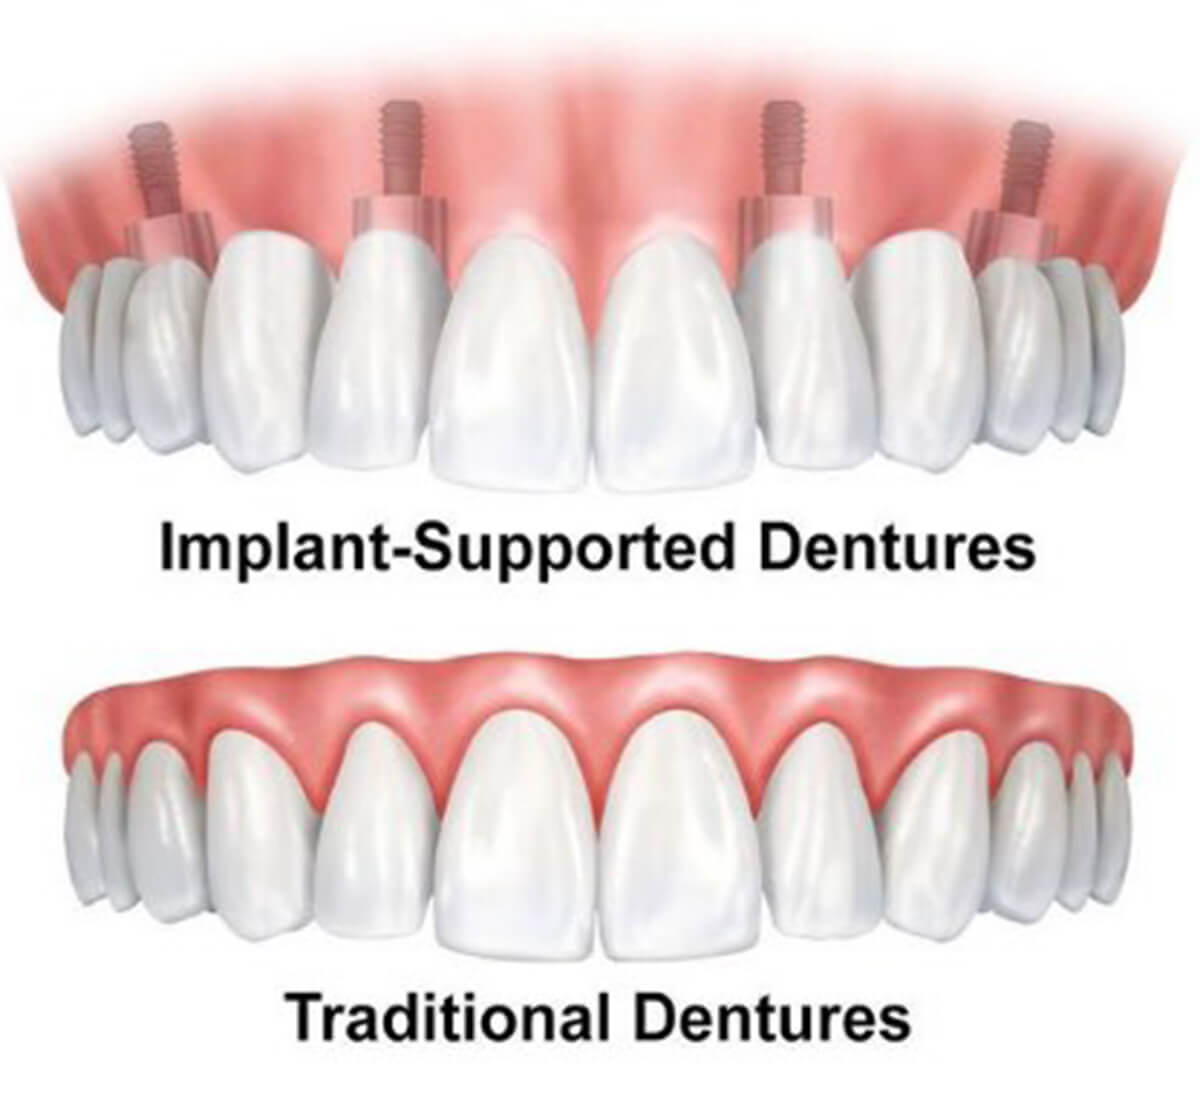 Implant dentures | Complete Dental Implants Perth